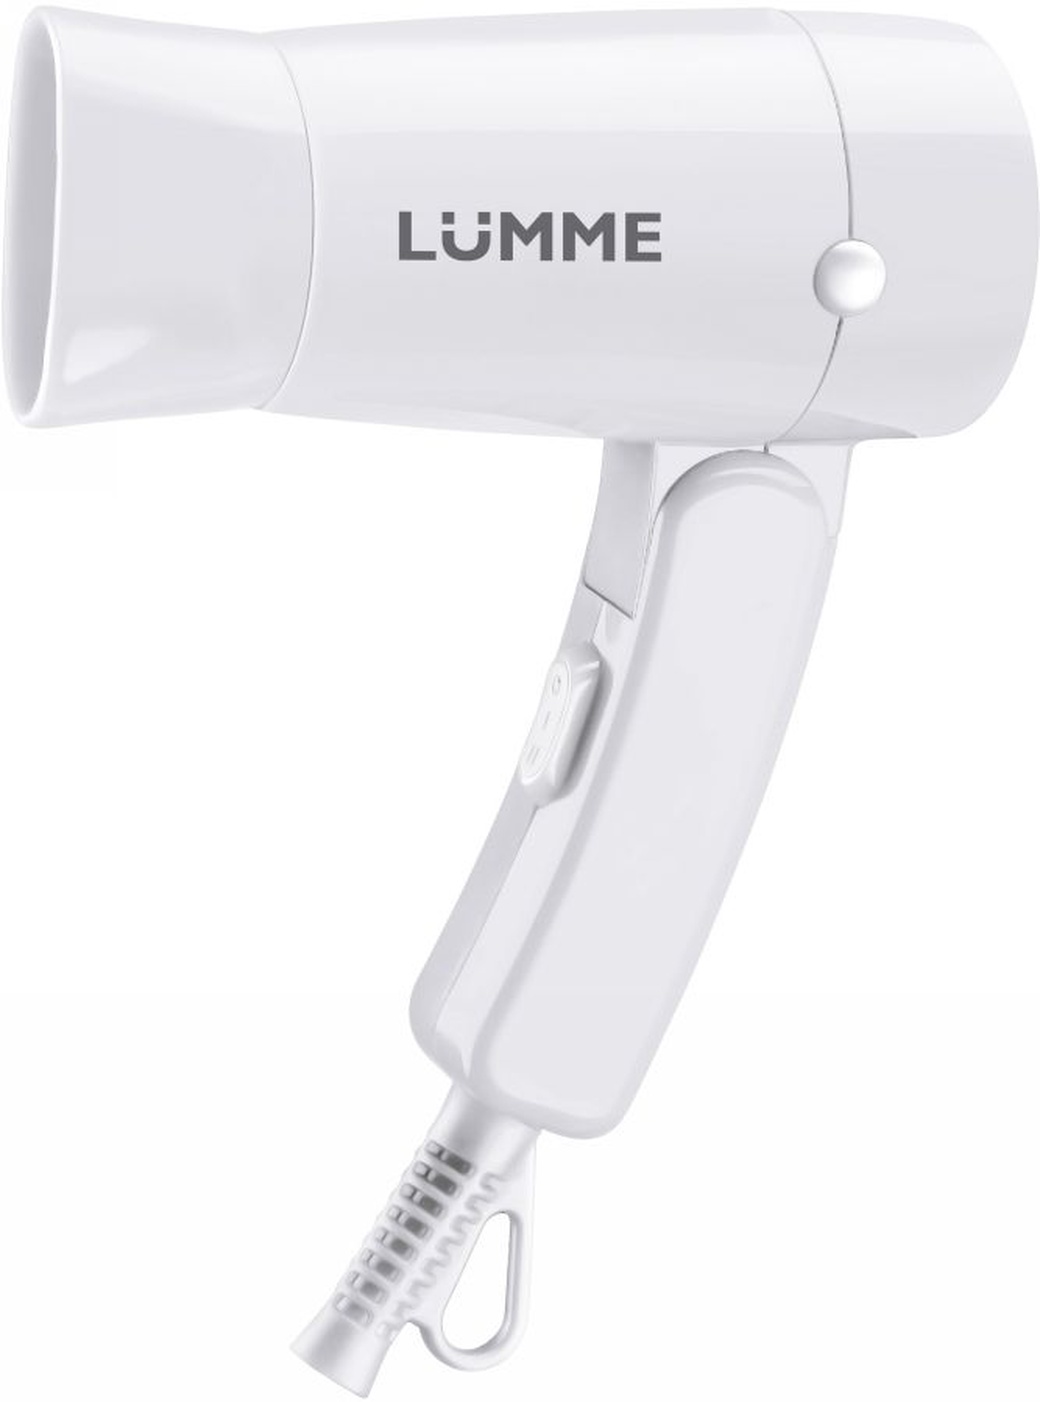 Фен LUMME LU-1054 белый жемчуг фото